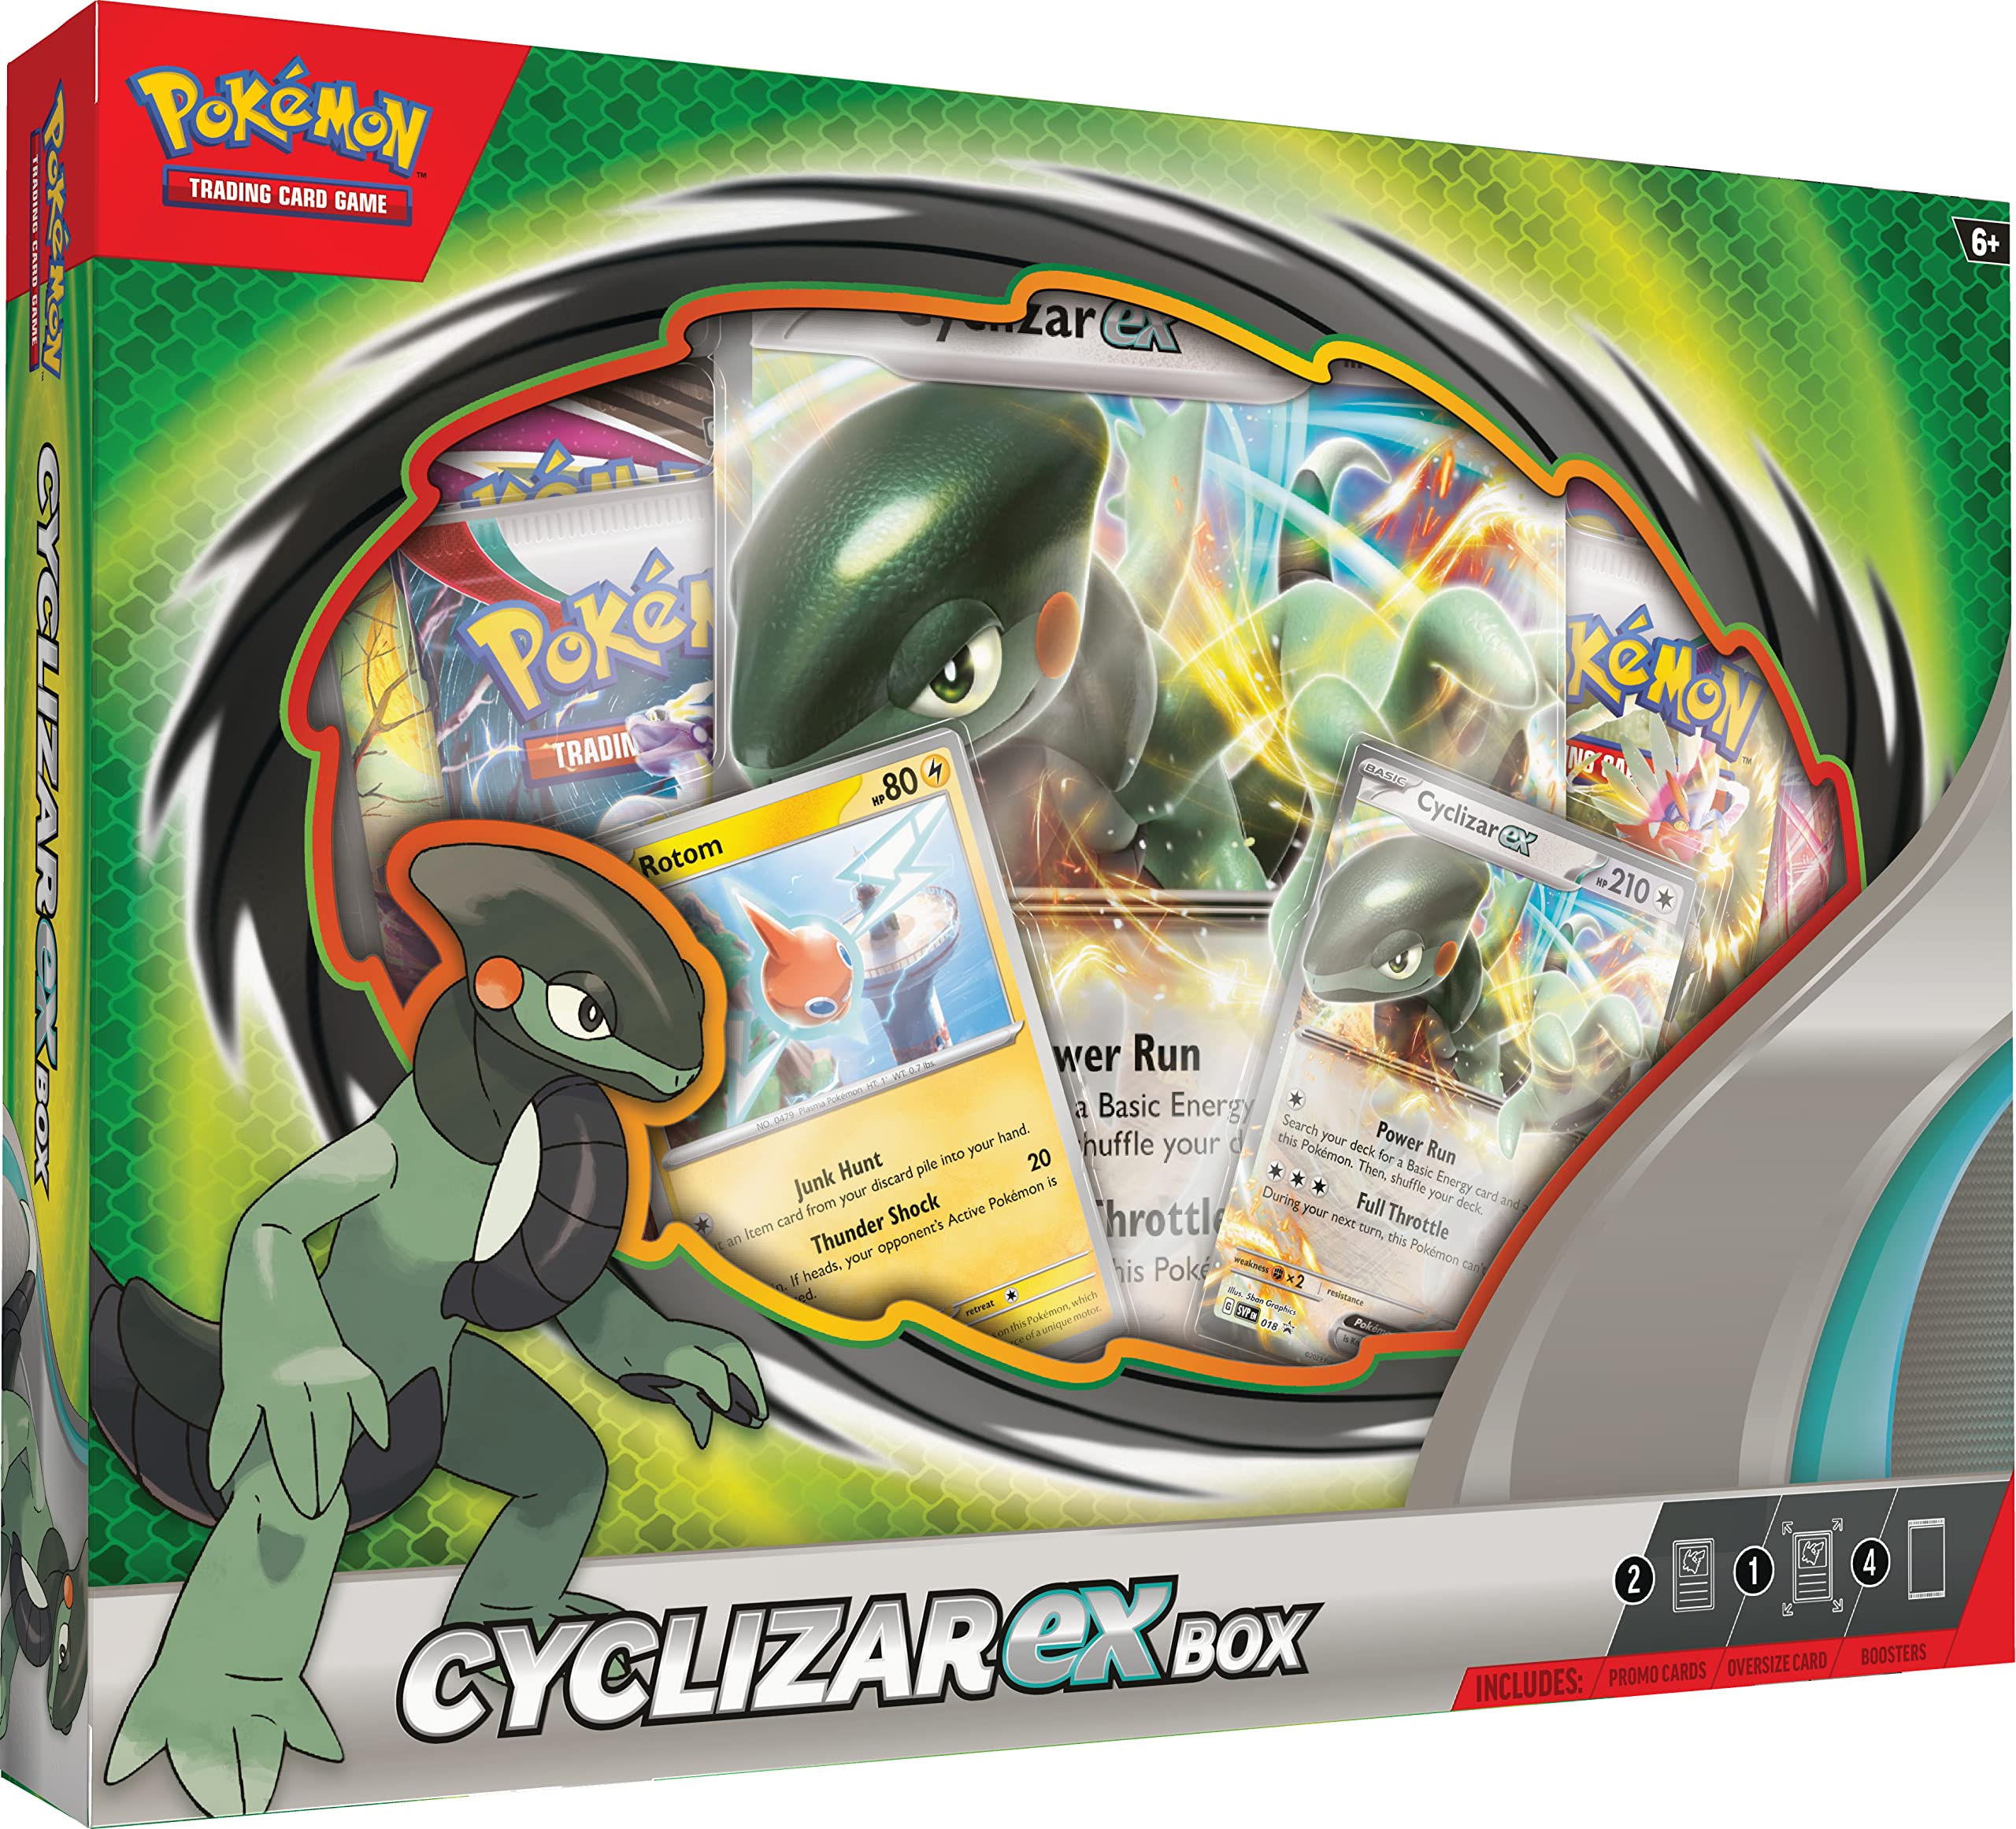 Pokemon TCG: Cyclizar ex Box - 4 Packs, Promo Cards